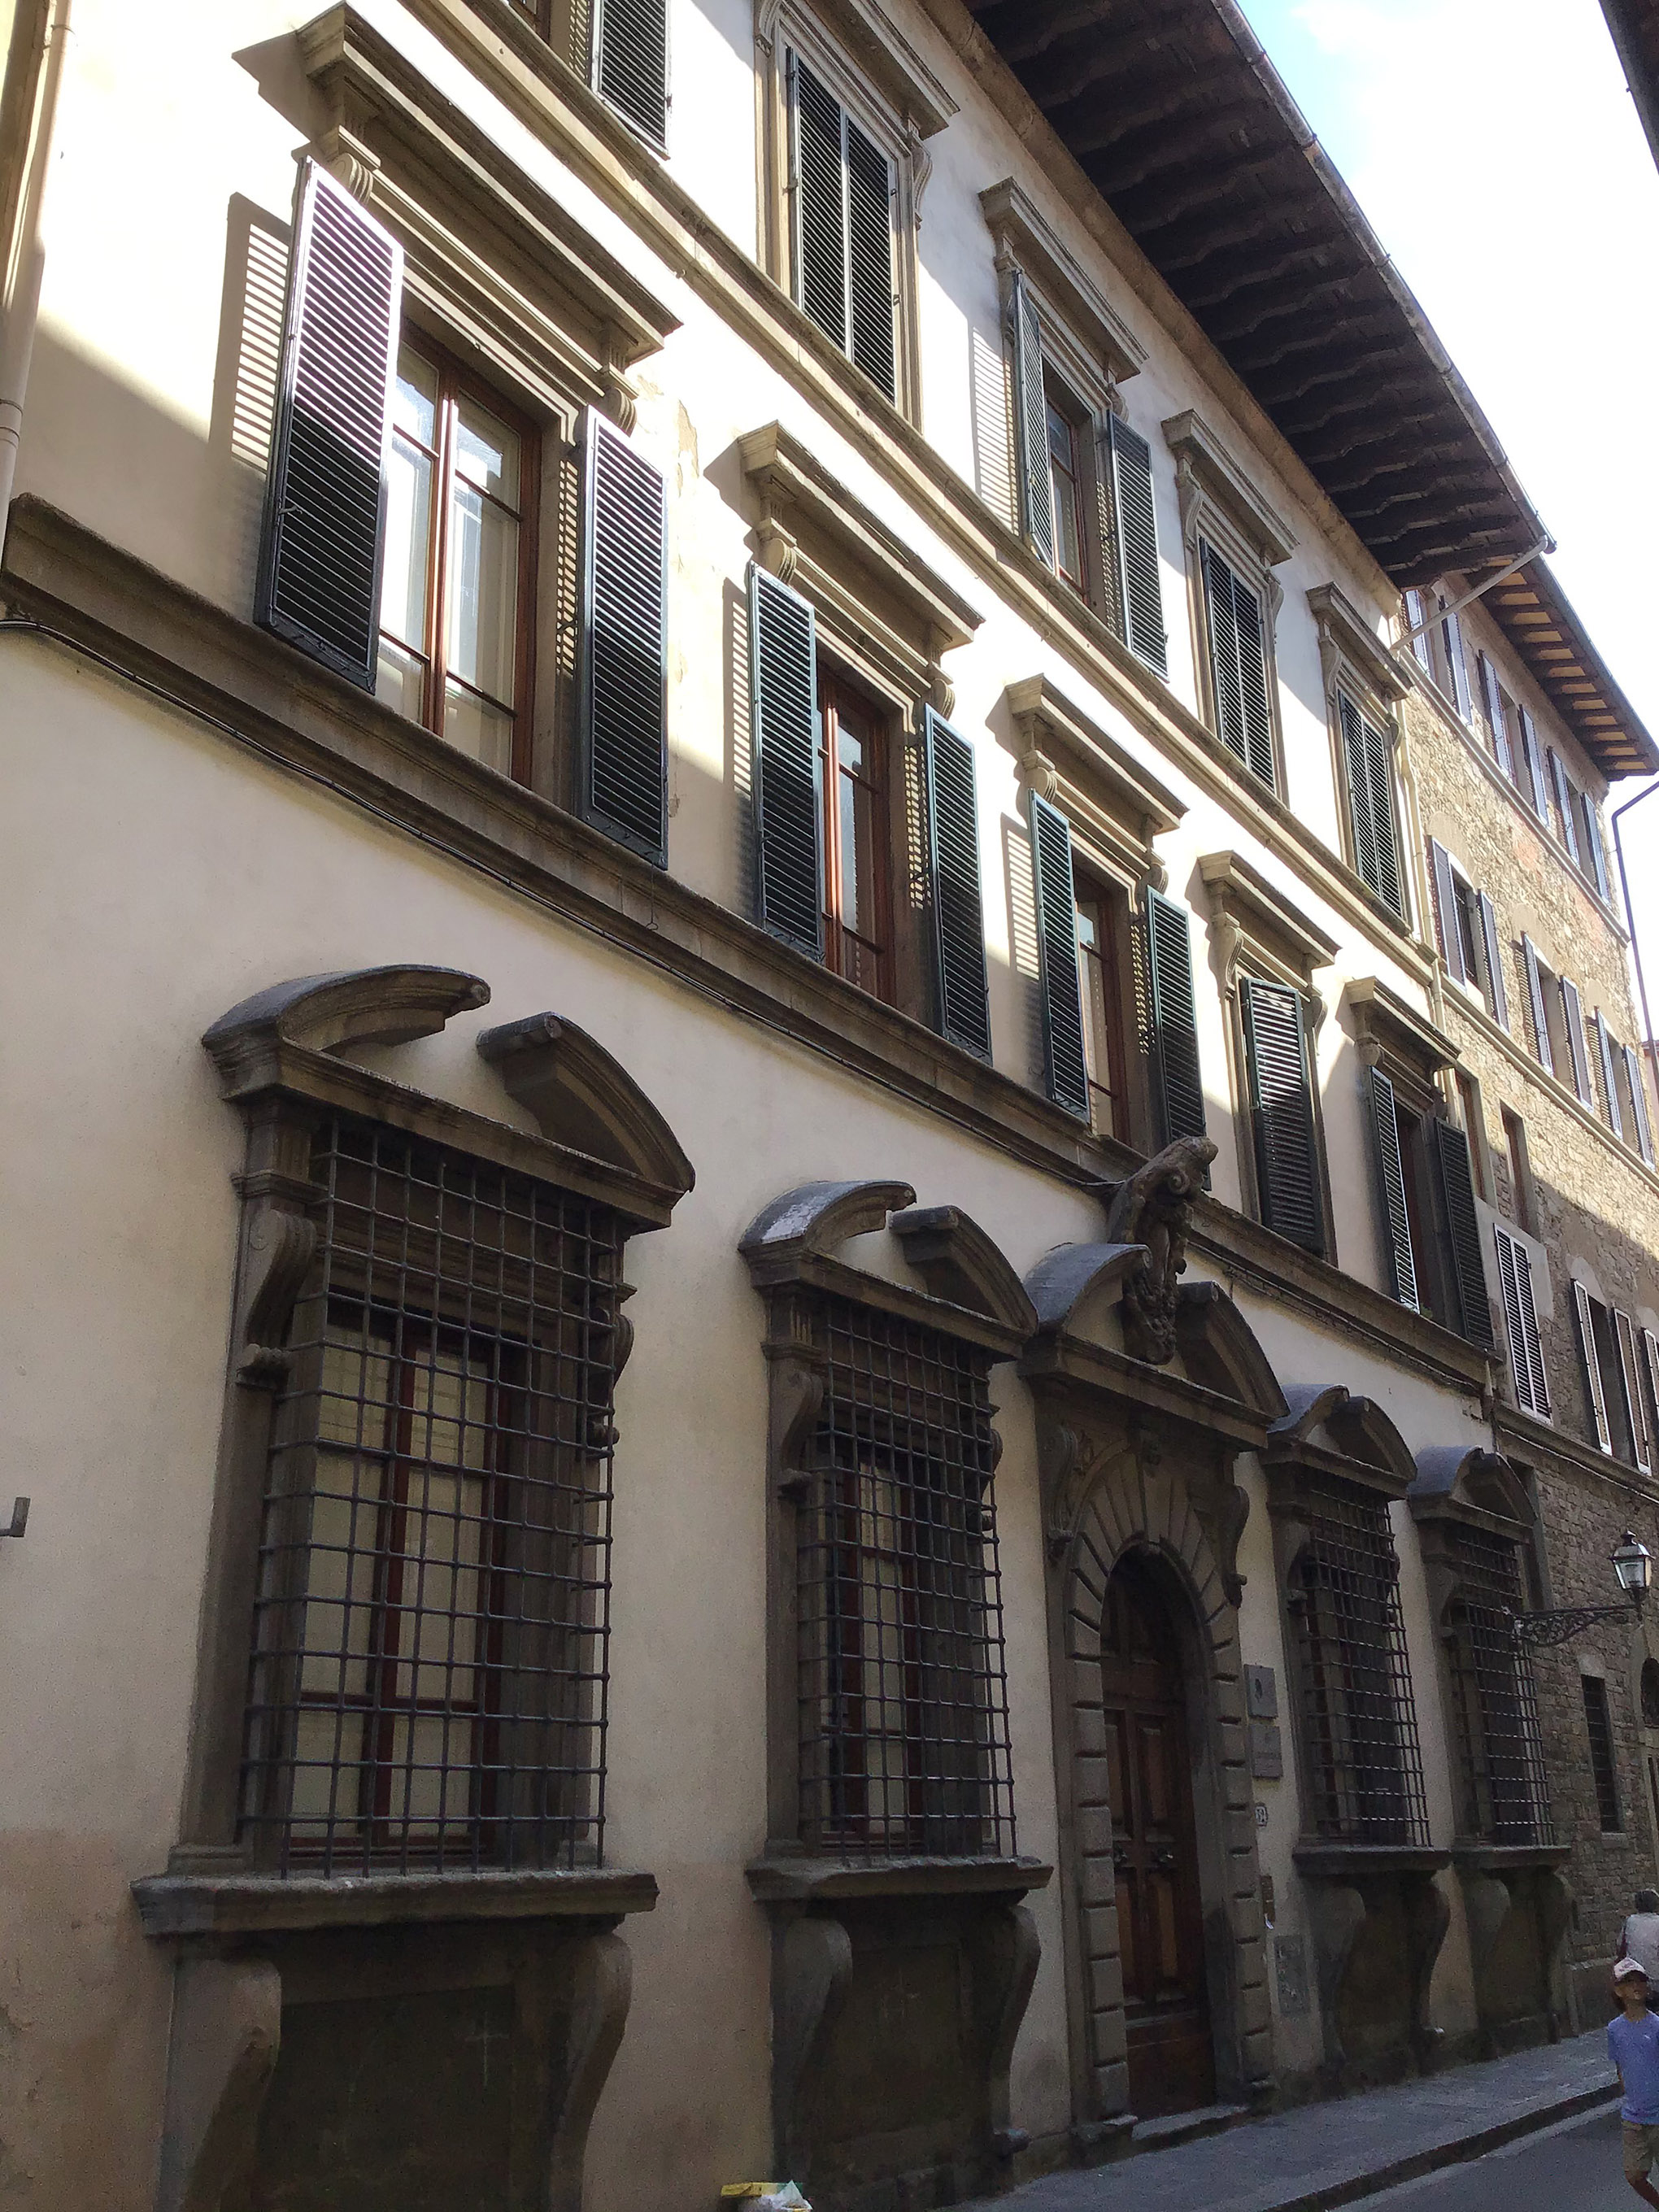 Palazzo Fioravanti già Elaguine (palazzo) - Firenze (FI) 